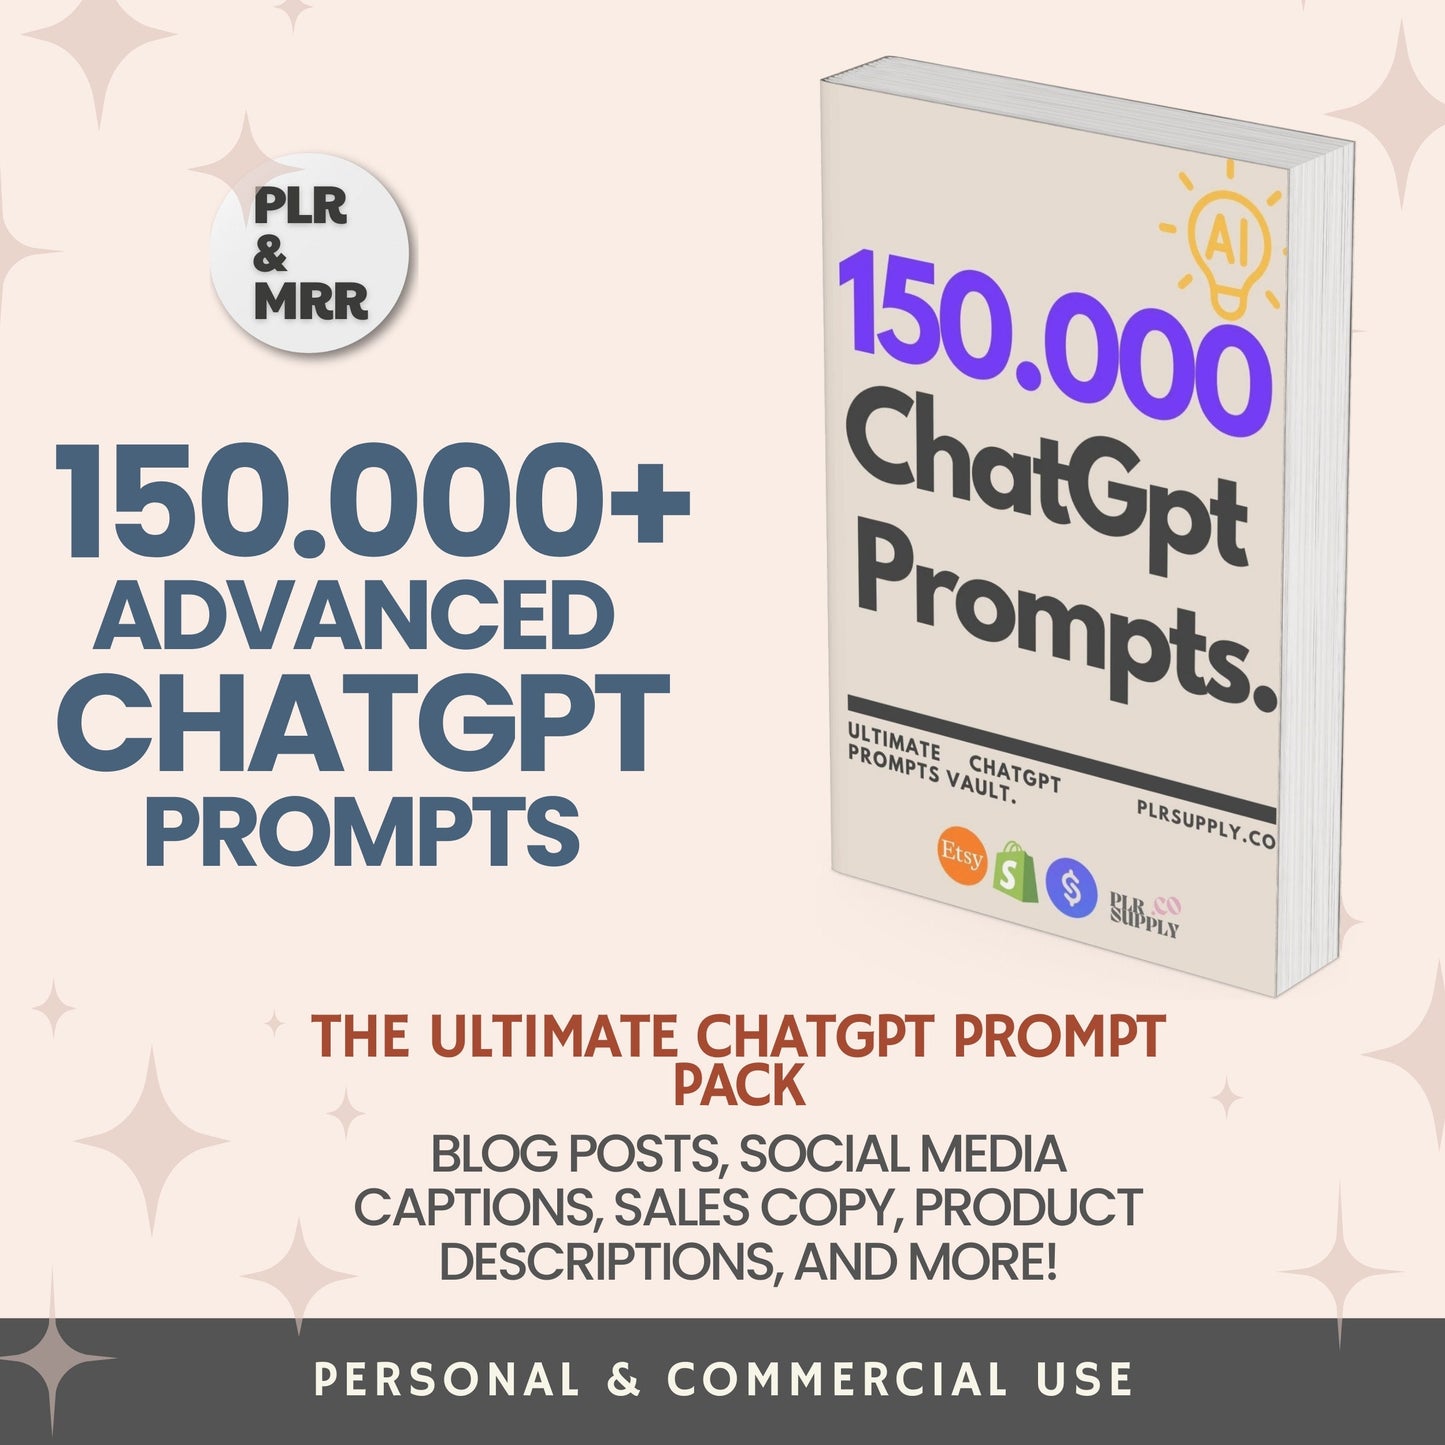 ChatGpt Prompts Mega Bundle Master Resell Rights- DFY Digital Product